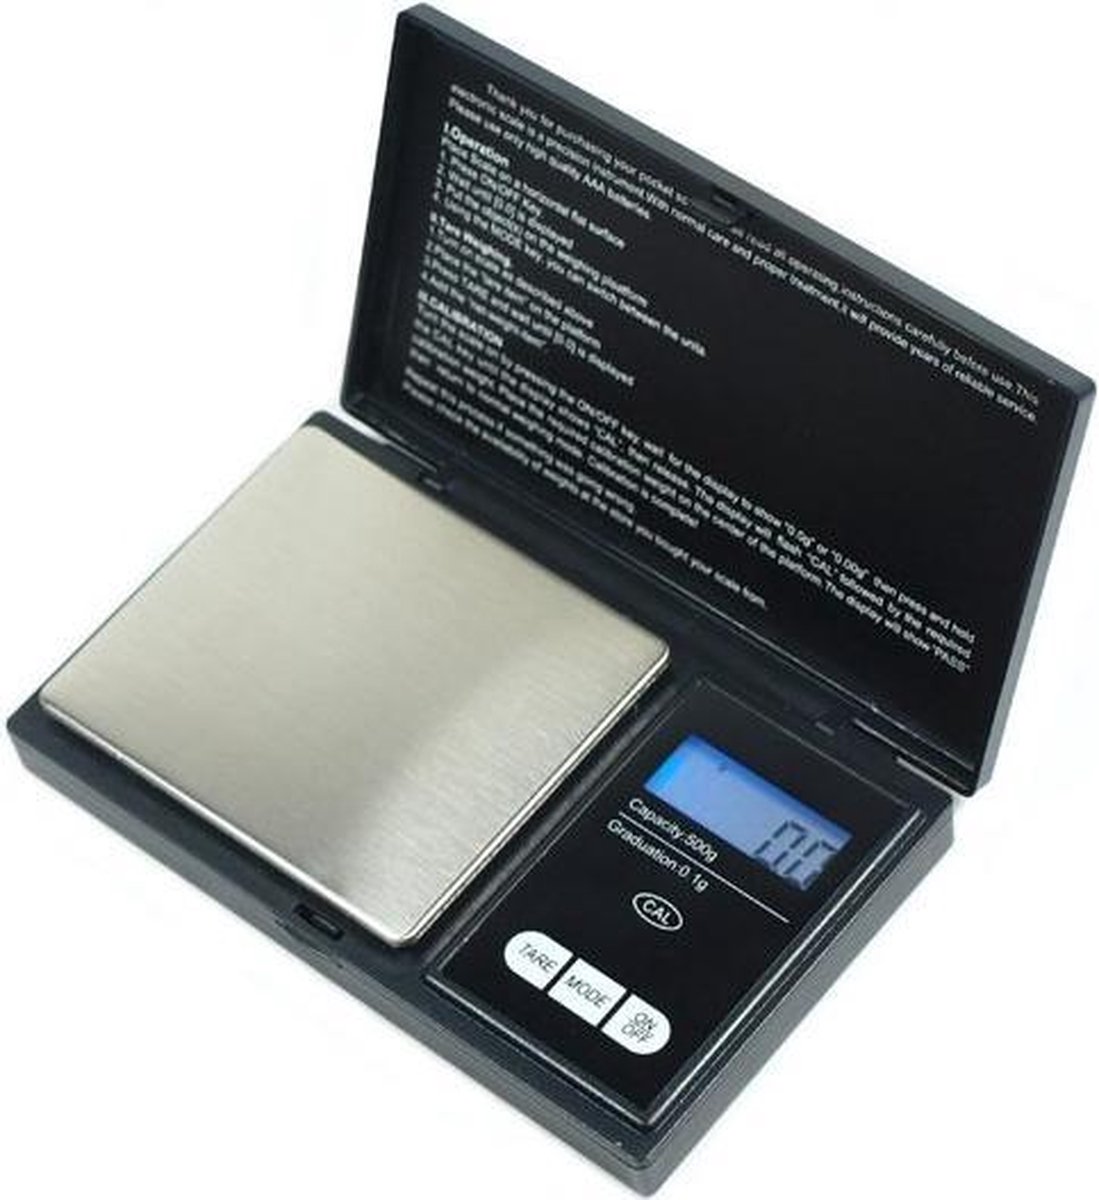 Professionele Digitale Mini Pocket Keuken Precisie Weegschaal Op Batterij - 0.1 Tot 500 Gram Nauwkeurig - Merkloos